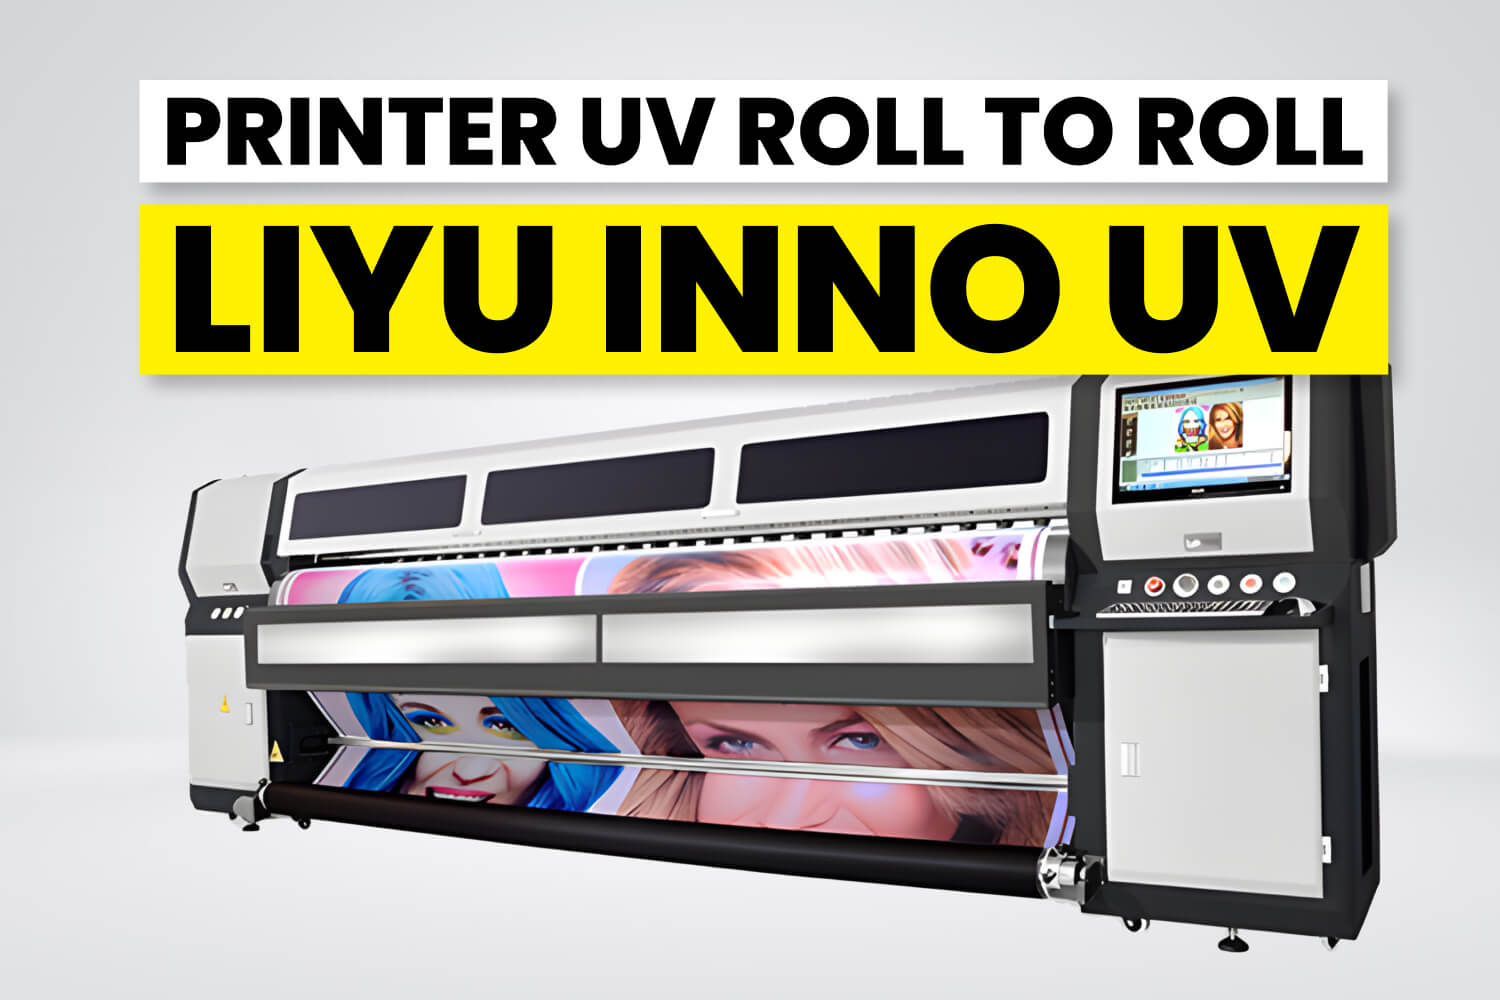 Printer Uv Roll To Roll Liyu Inno Uv